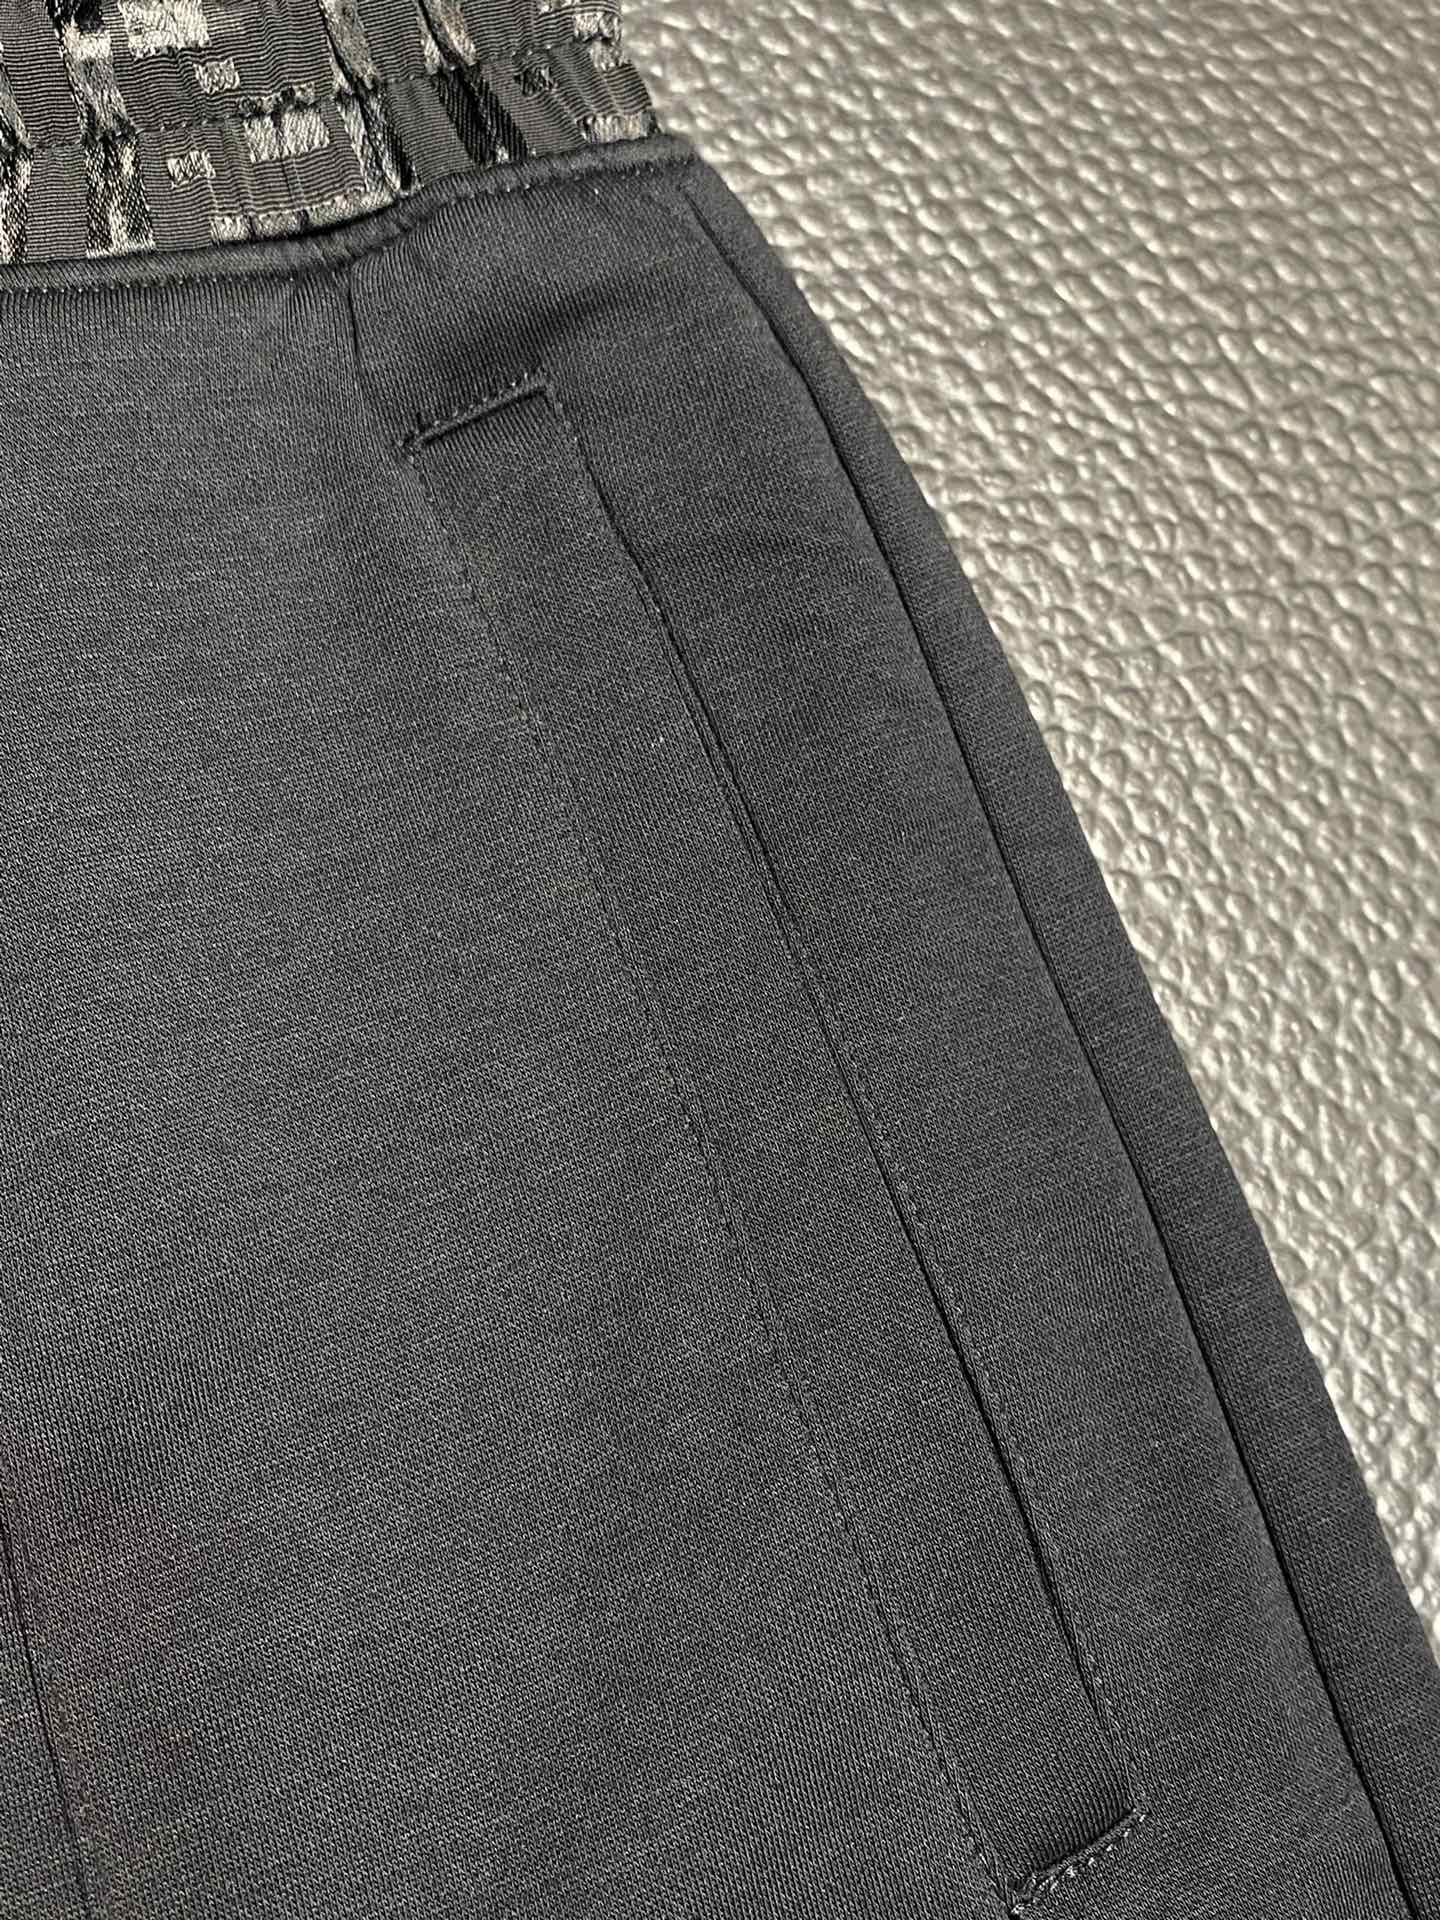 FENDI芬迪独家专供新款休闲裤高端版本！专柜定制面料透气舒适度高细节无可挑剔品牌元素设计理念体现高品质